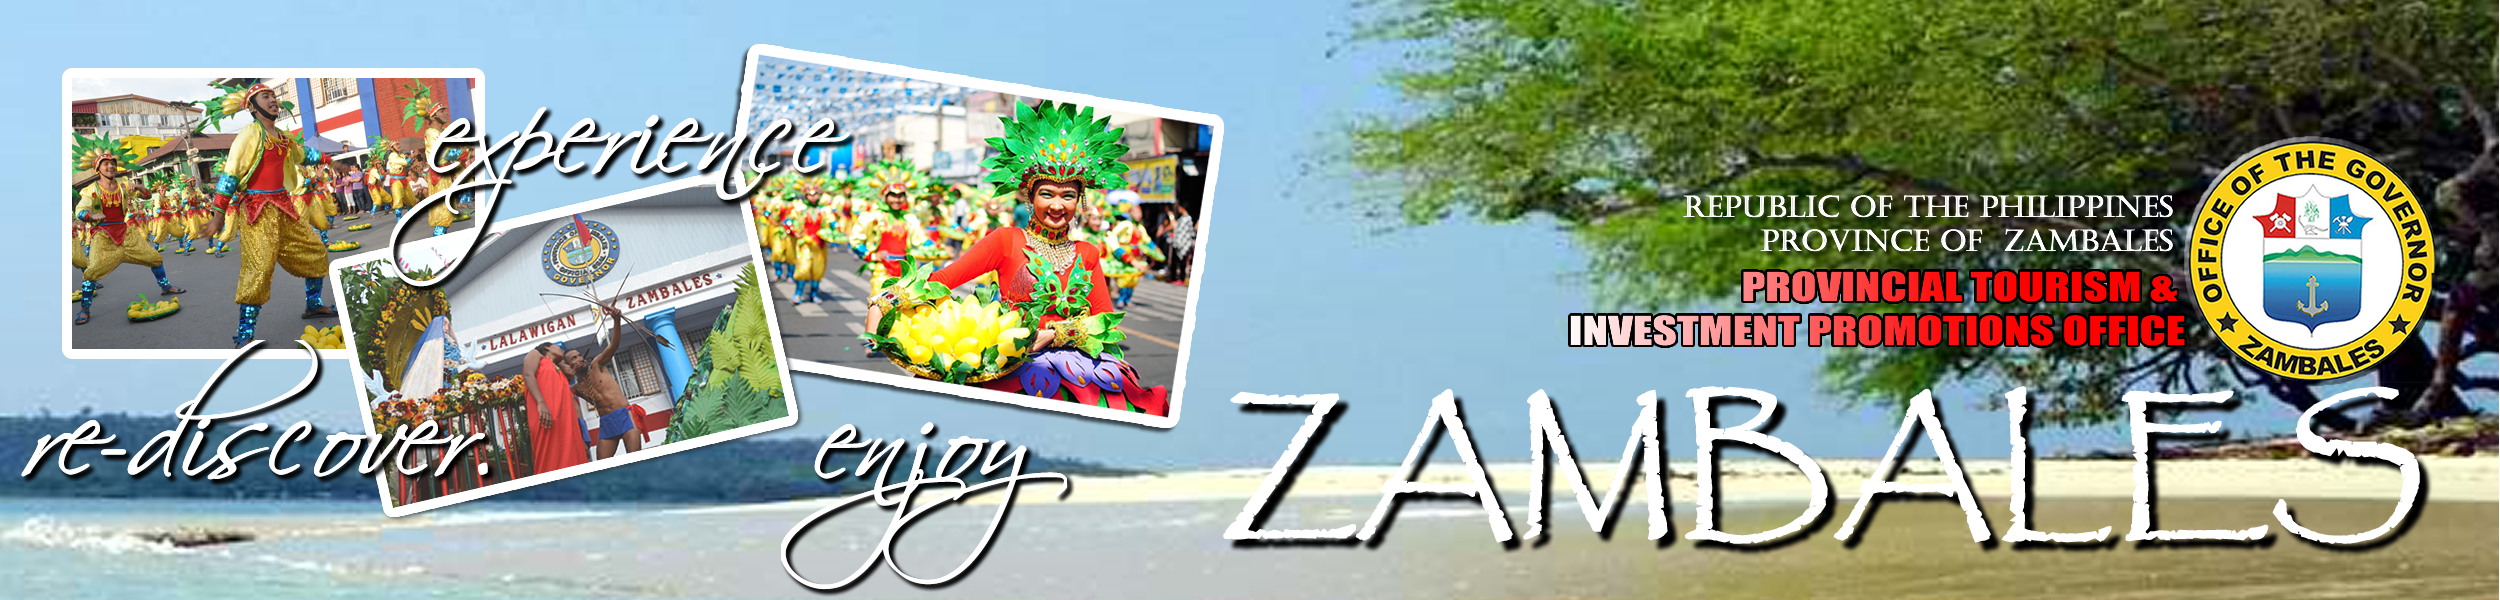 zambales provincial tourism office